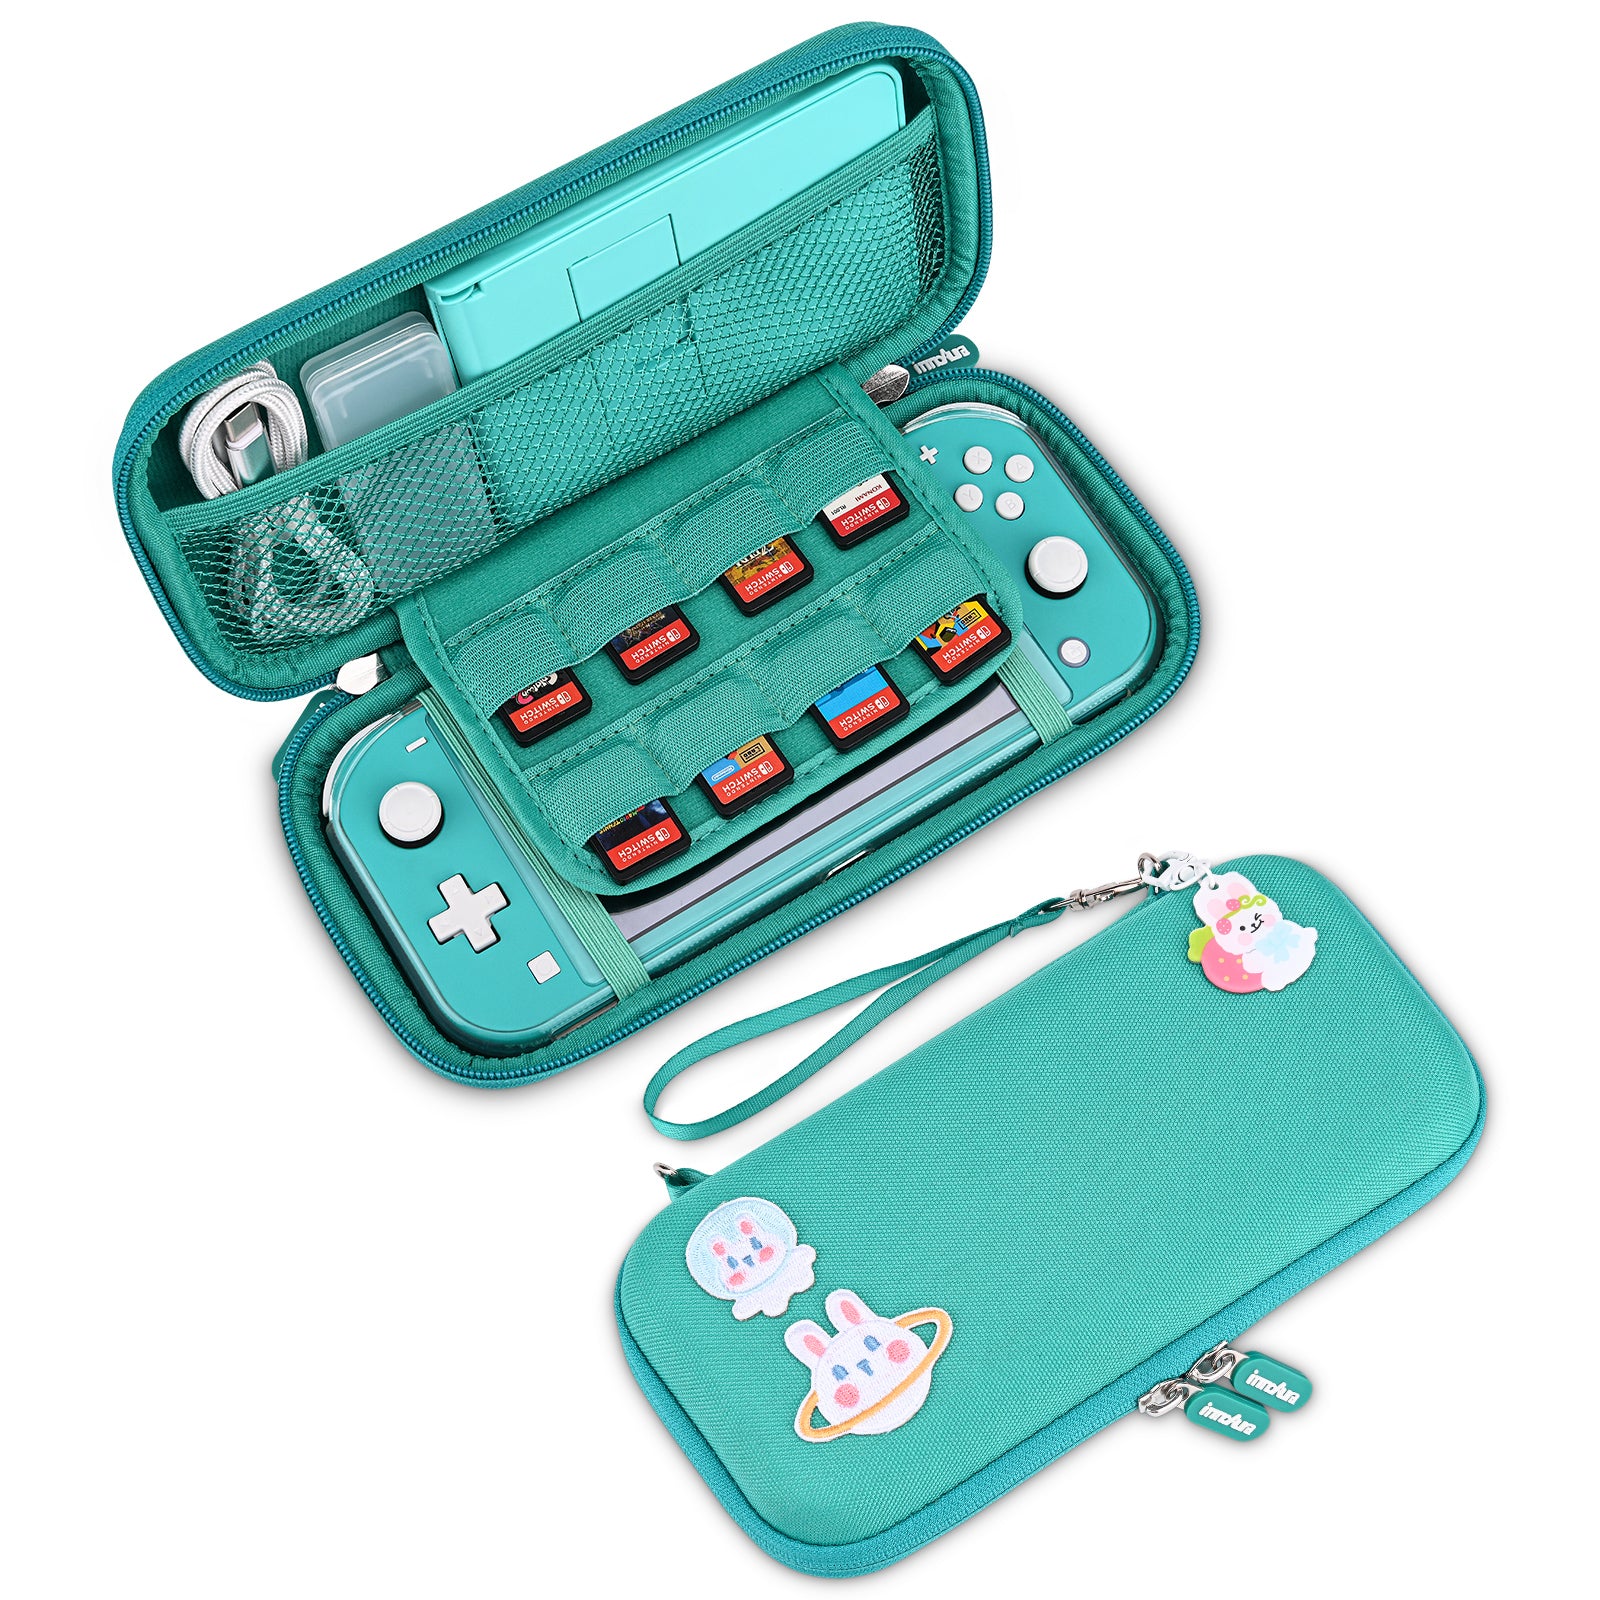 innoAura Nintendo Switch Lite Carrying Case, Travel Lite Case